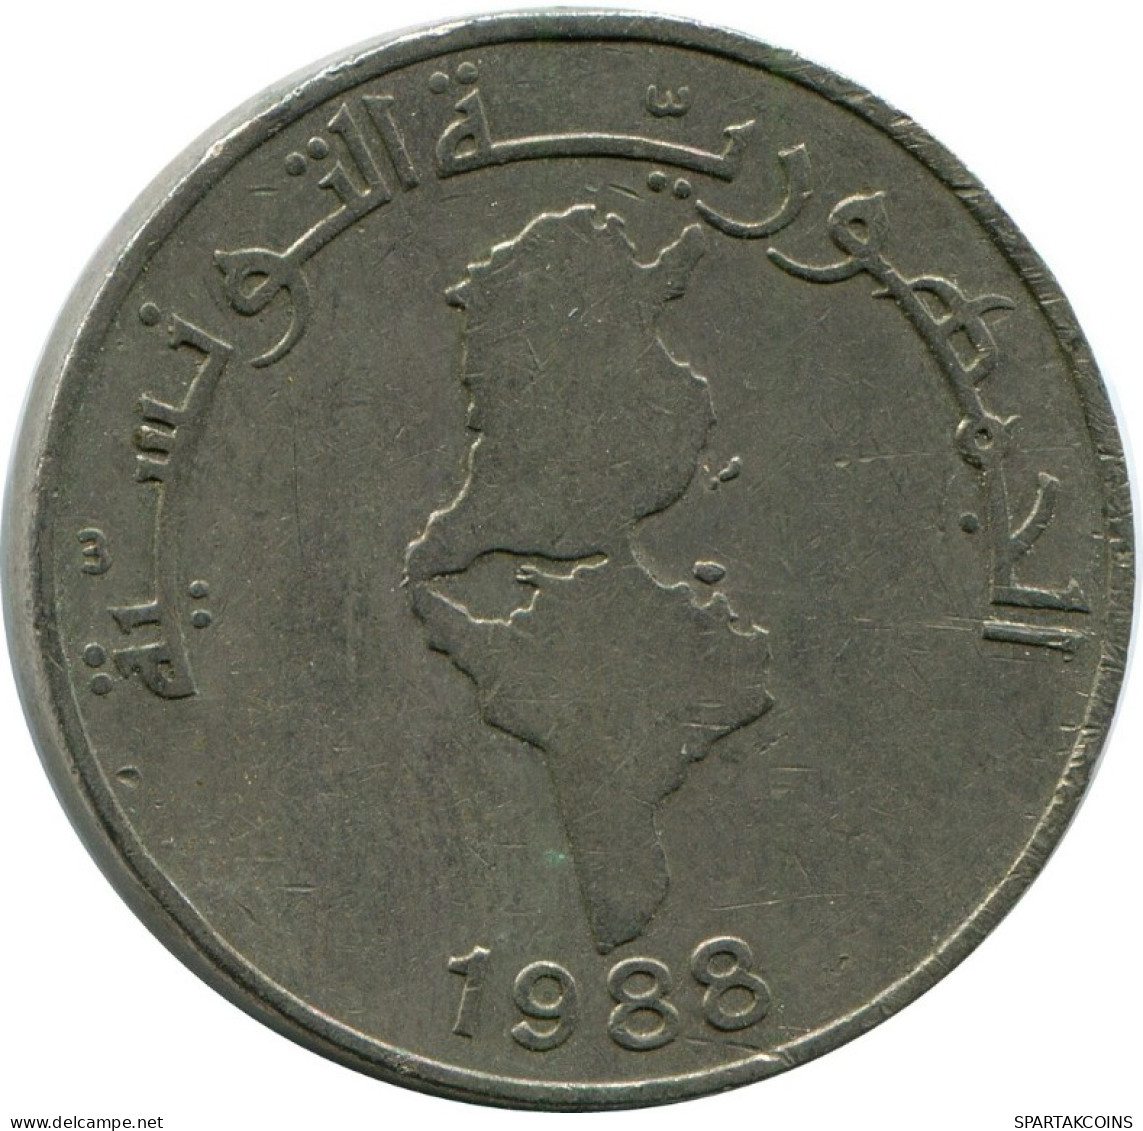 1 DINAR 1988 TUNISIA Coin #AH929.U.A - Tunesië